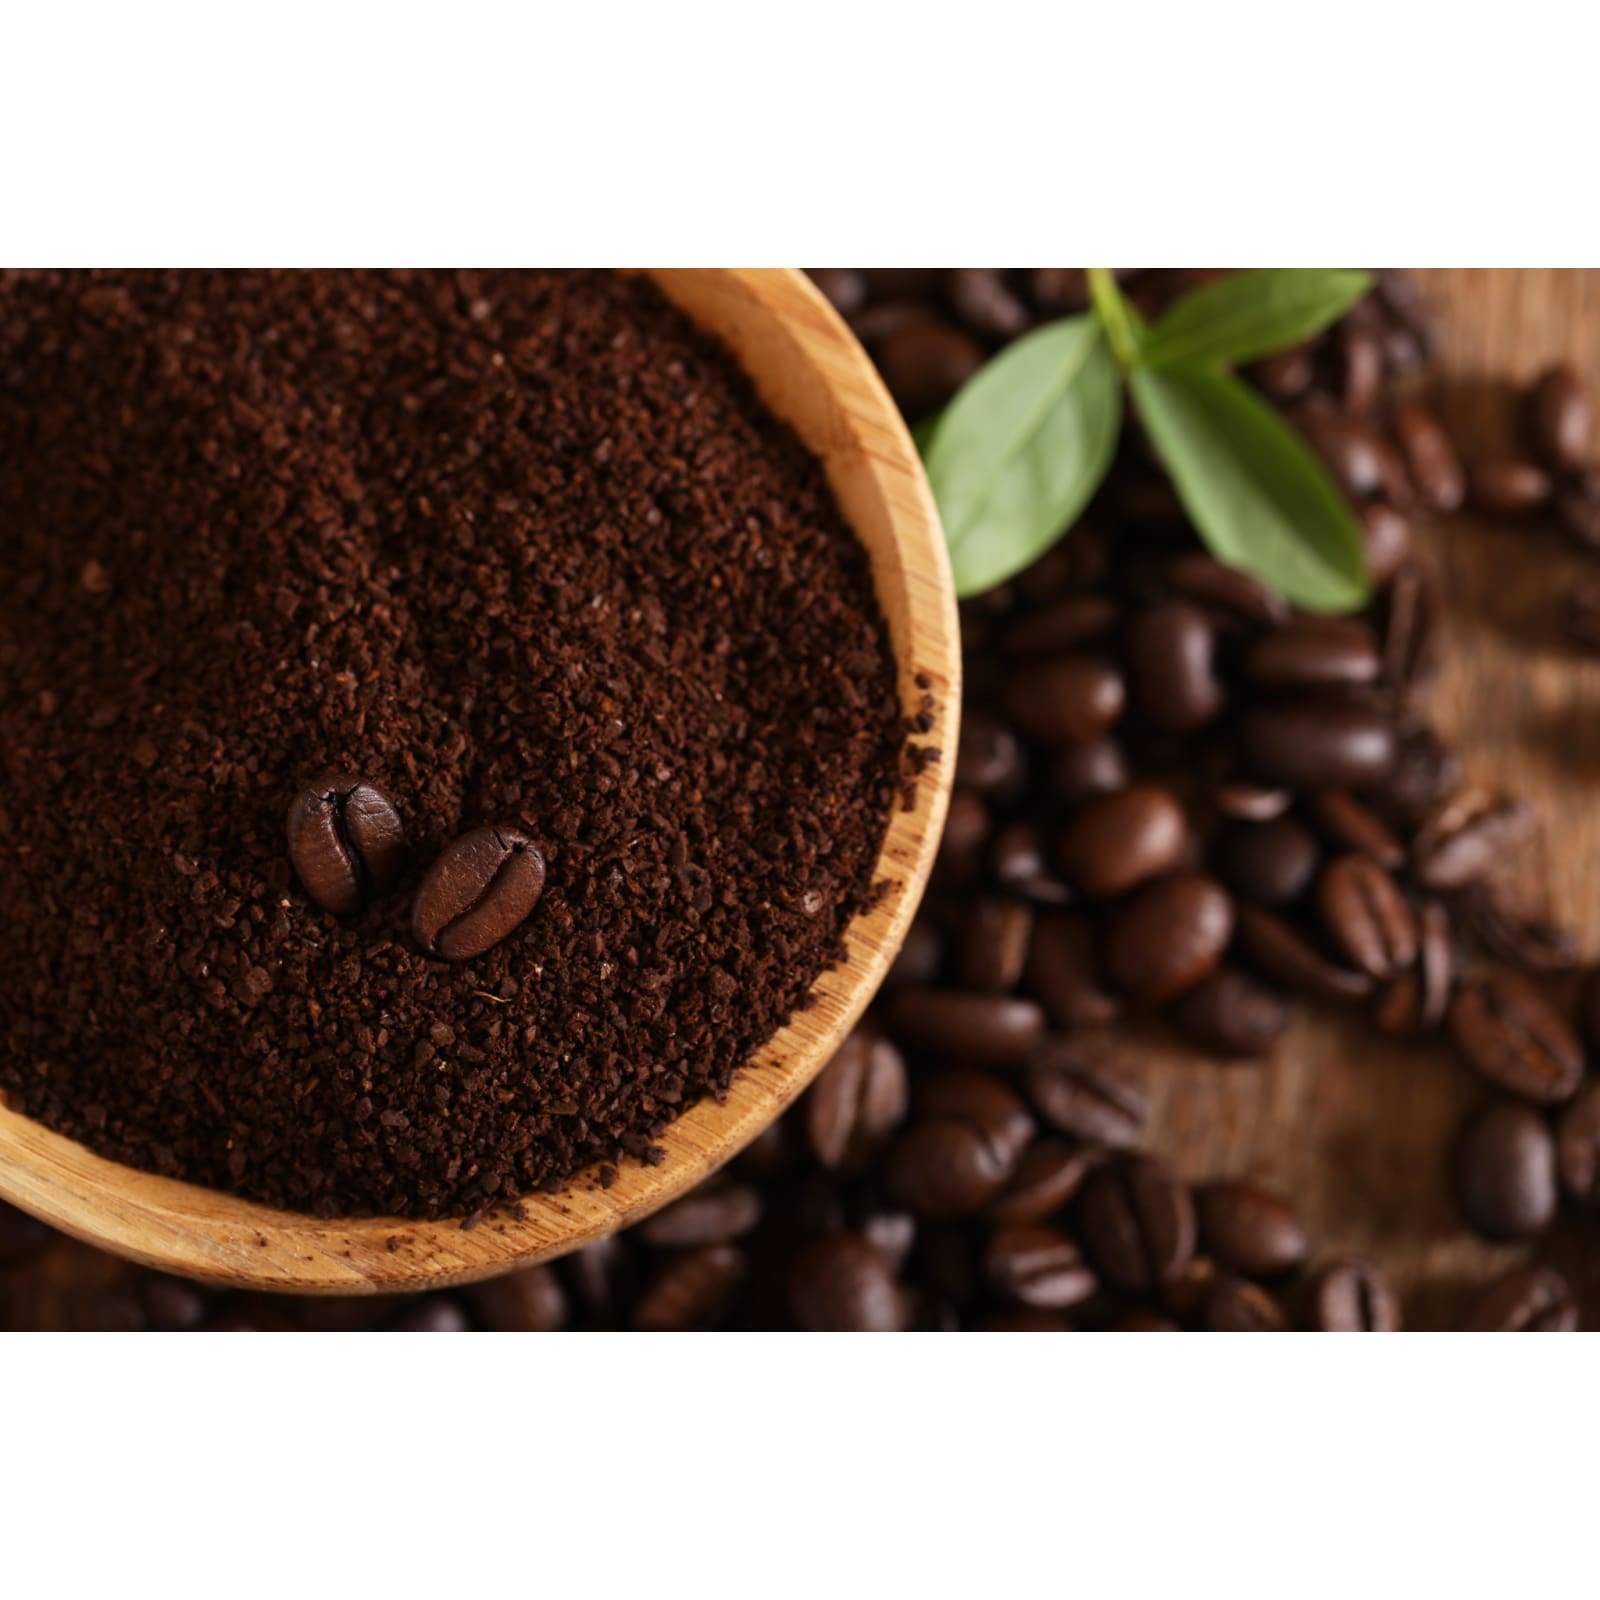 Mexico Craft Coffee - Single Origin - 12oz / Premium (Drip) - Coffee - $15.25